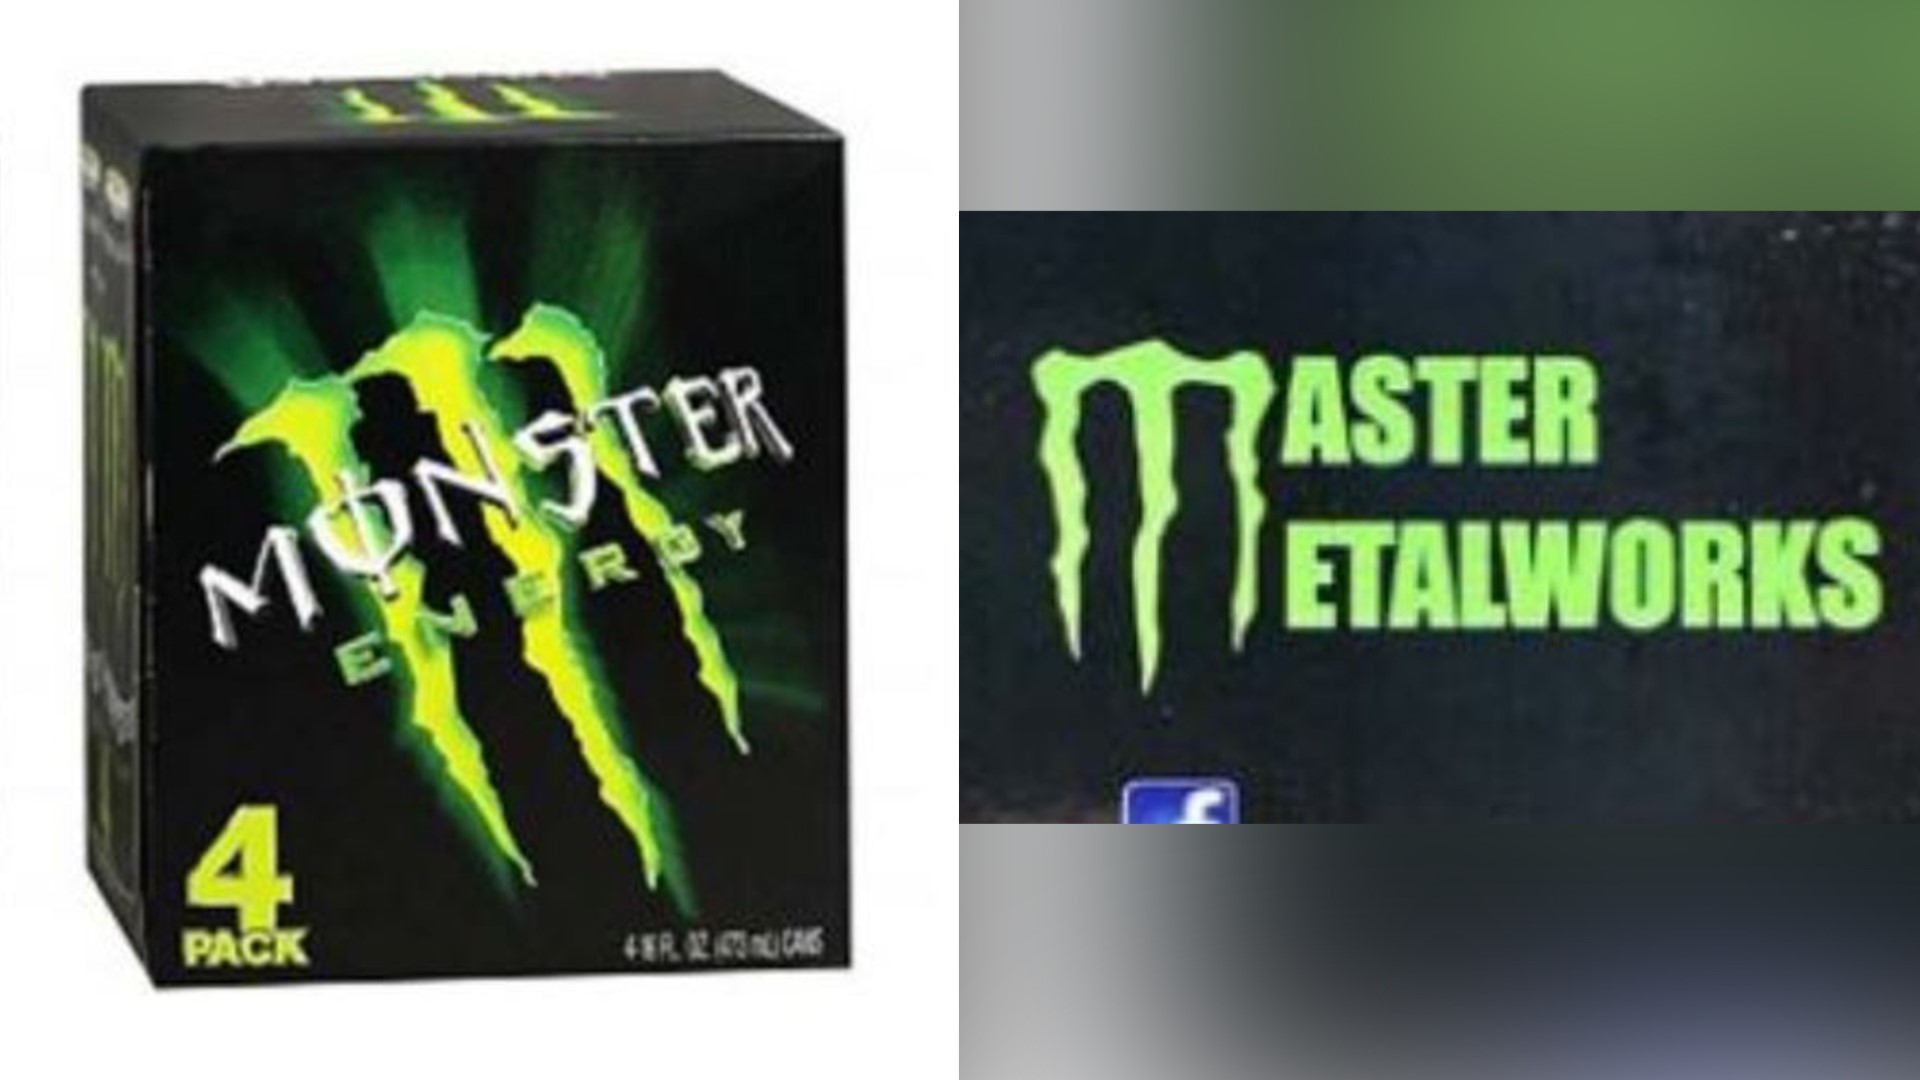 Monster Energy Company says Byron Master Metalworks stole logo | 13wmaz.com